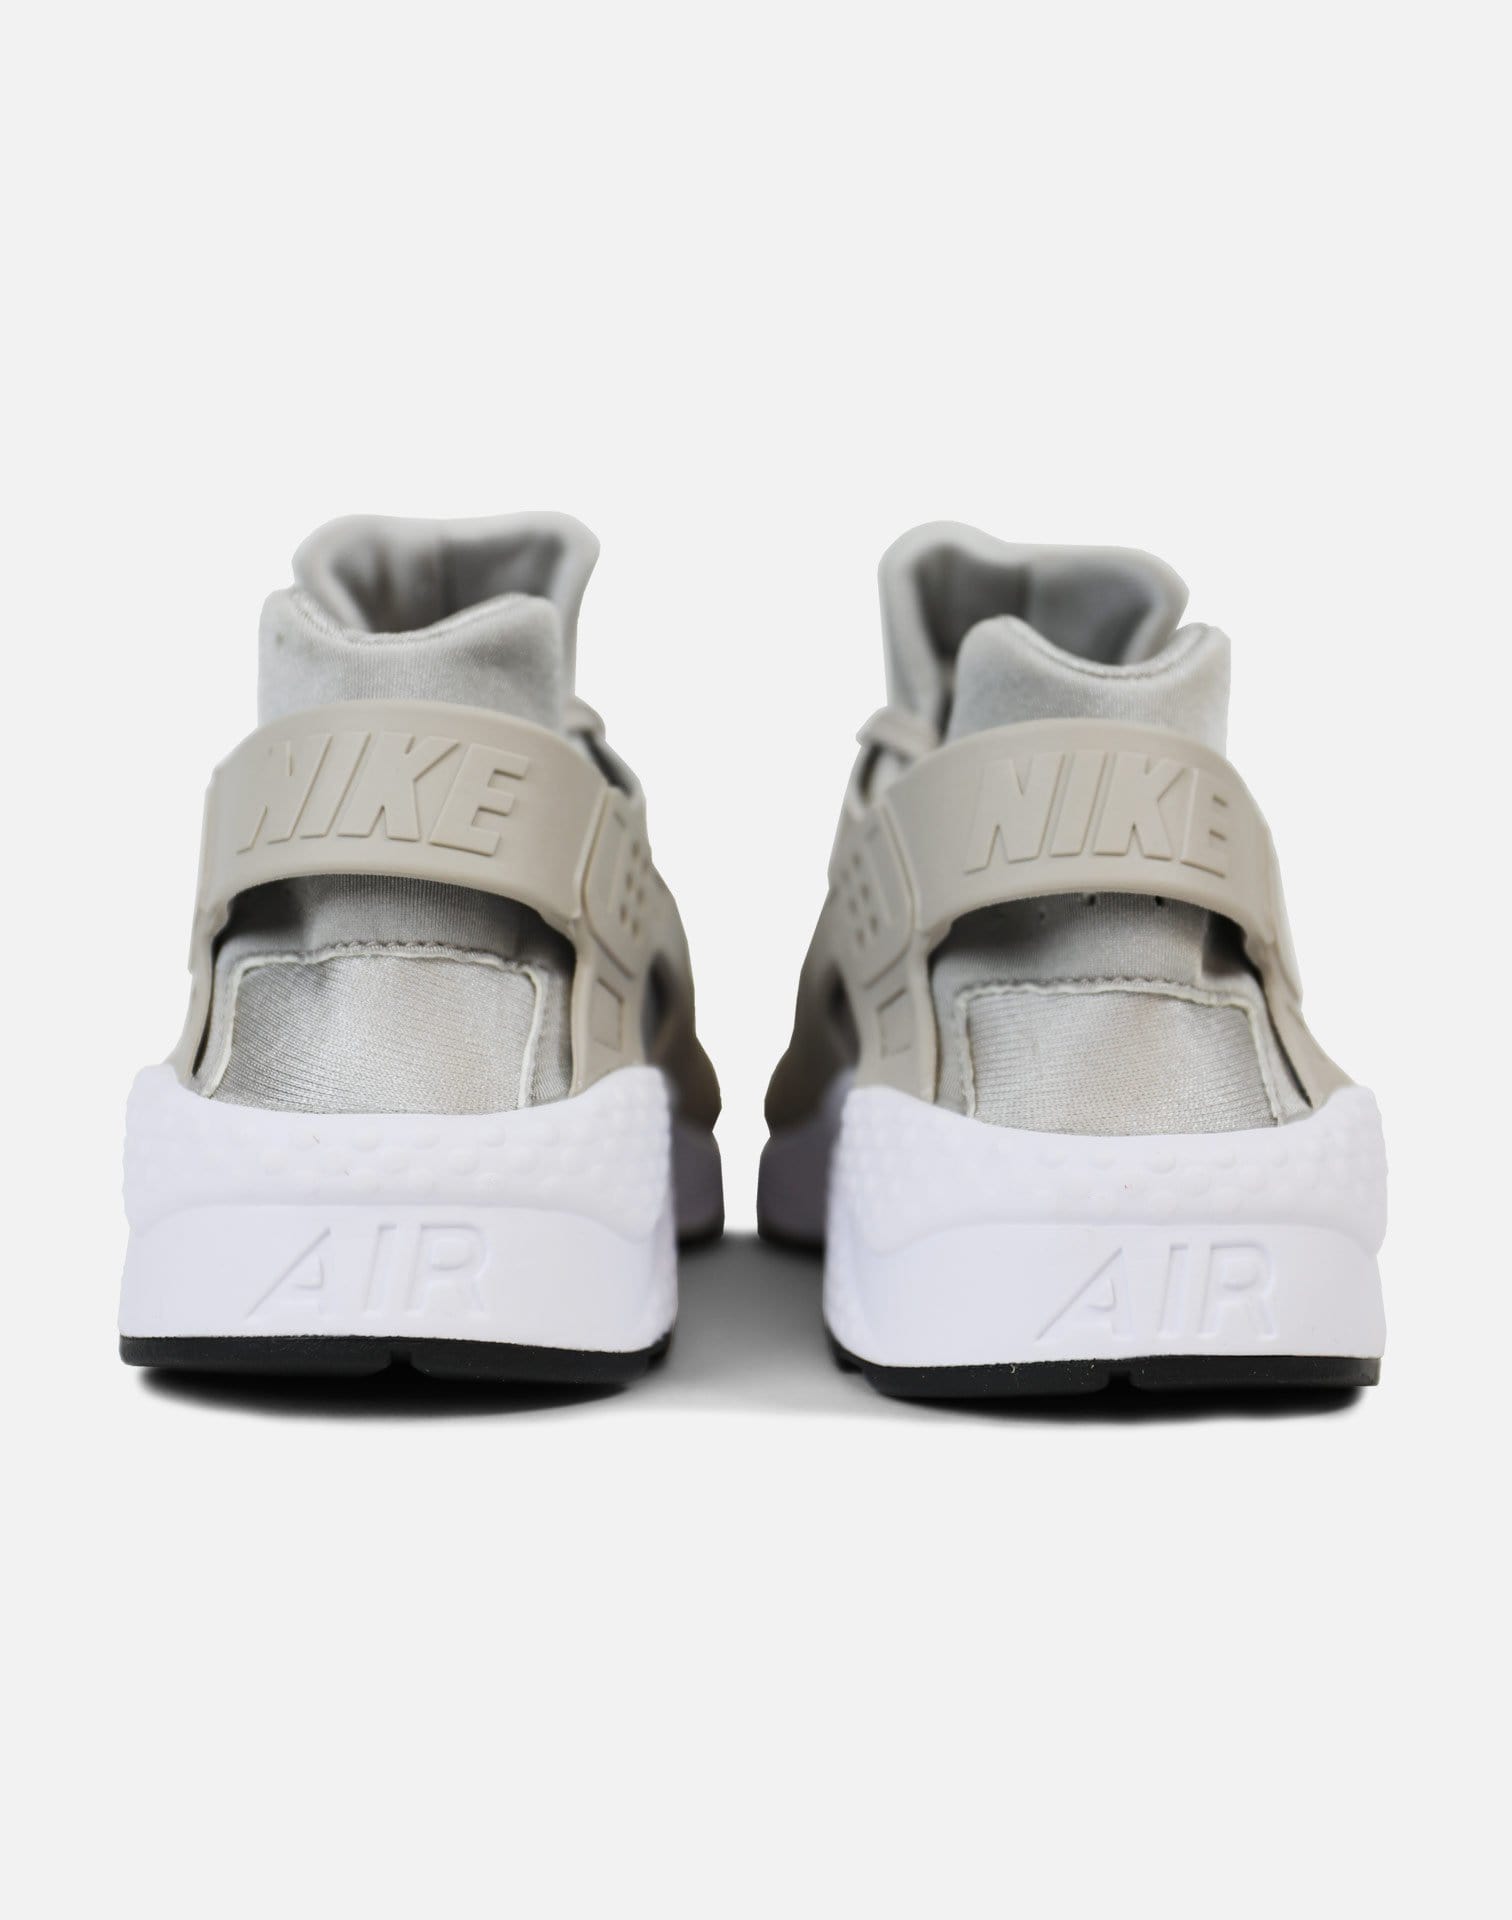 Nike Air Huarache Run (Cobblestone Grey/White-Black)